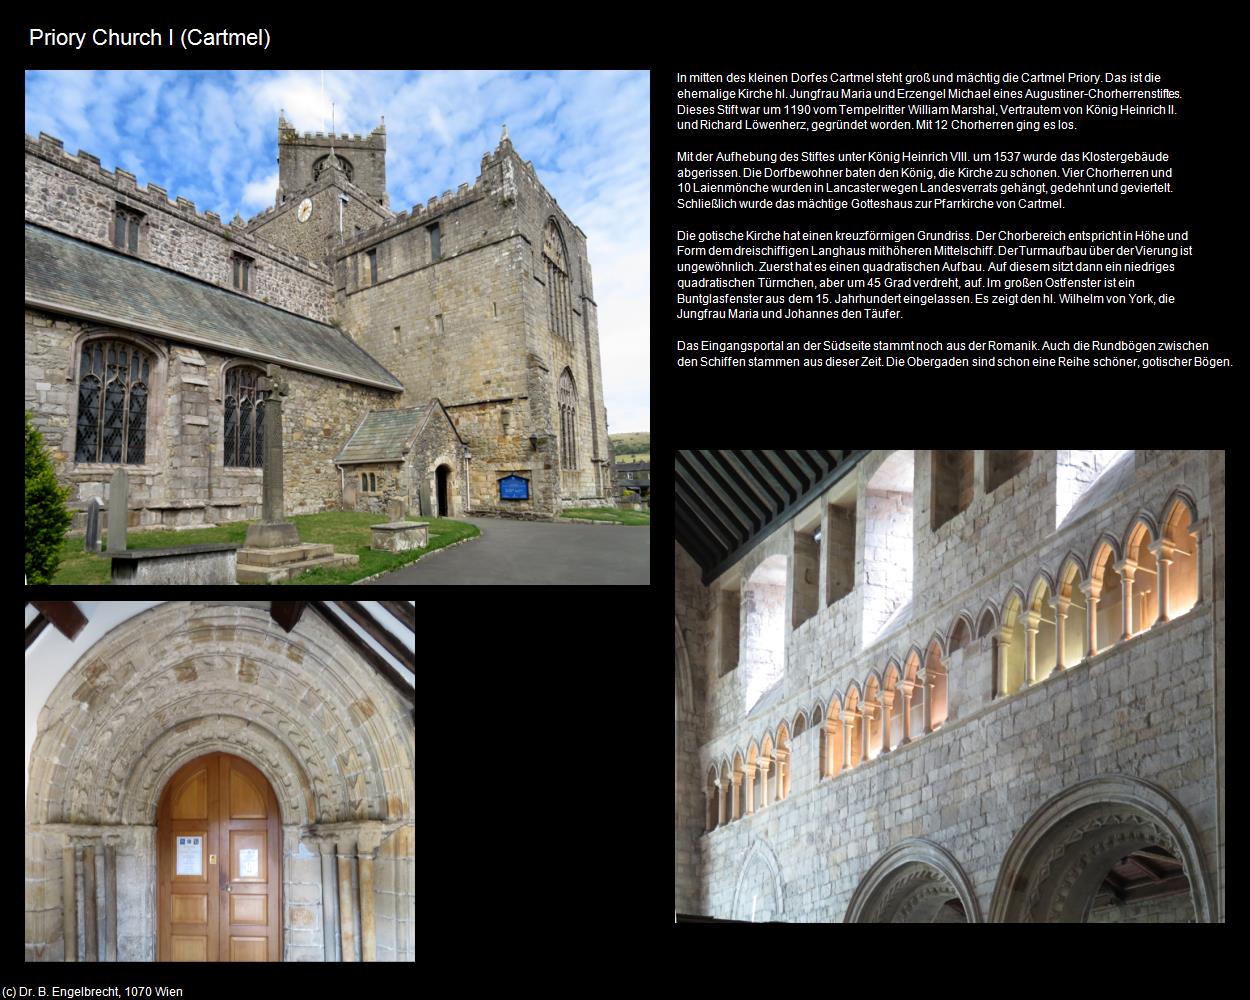 Priory Church I (Cartmel) (Cartmel, England ) in Kulturatlas-ENGLAND und WALES